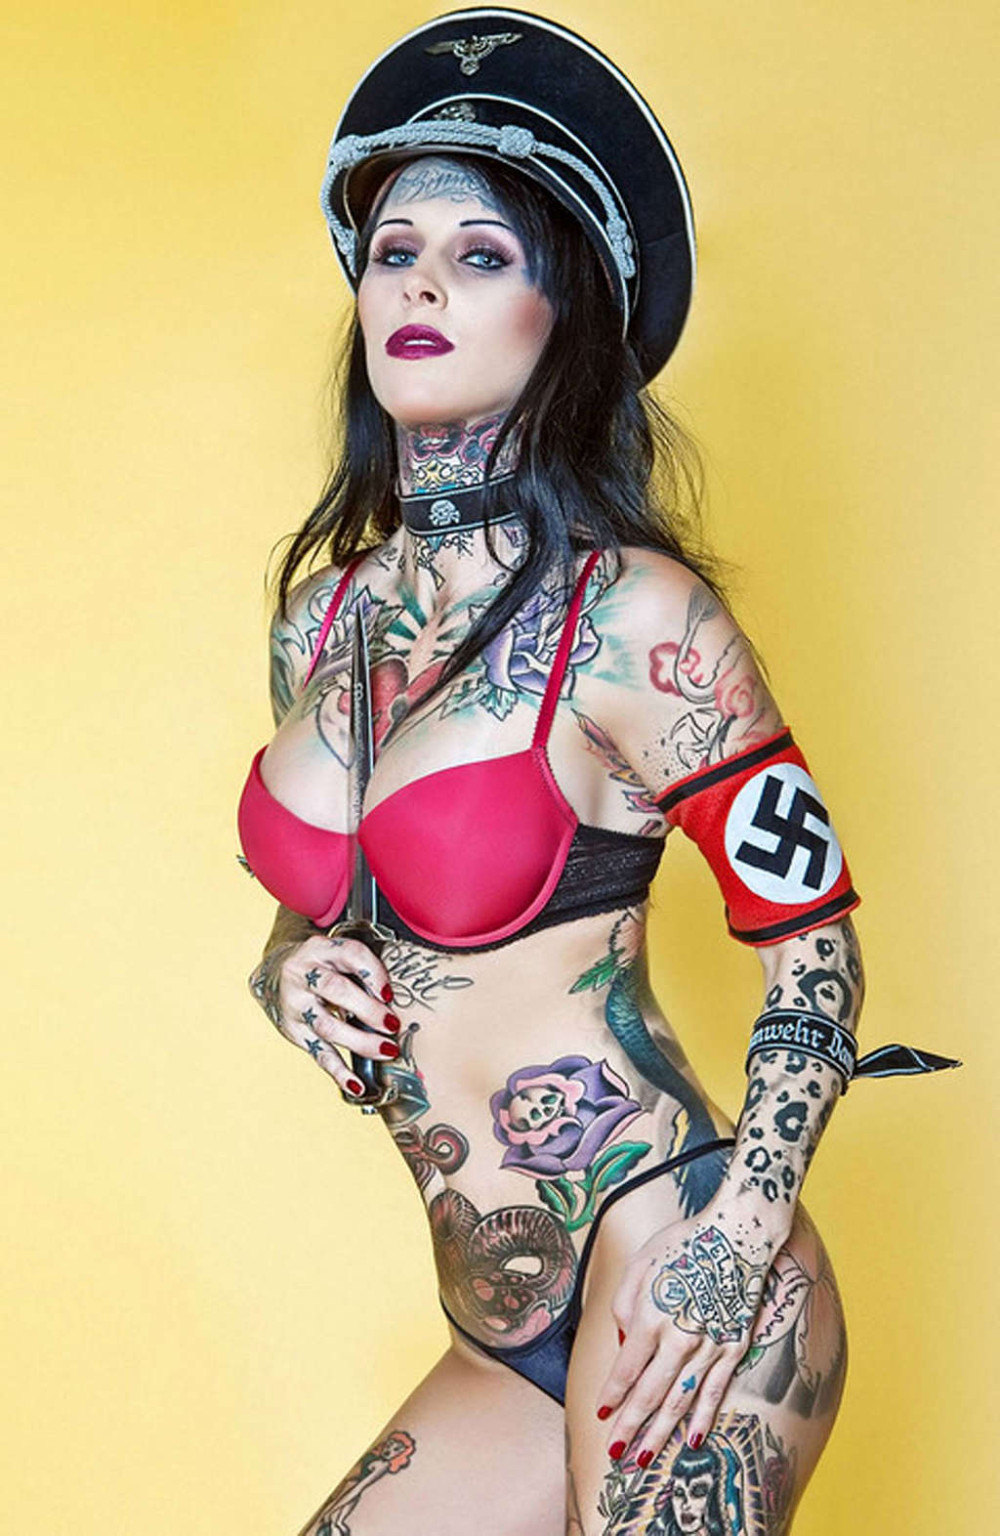 Michelle bombshell montrant son corps chaud et ses tatouages sexy.
 #75354611